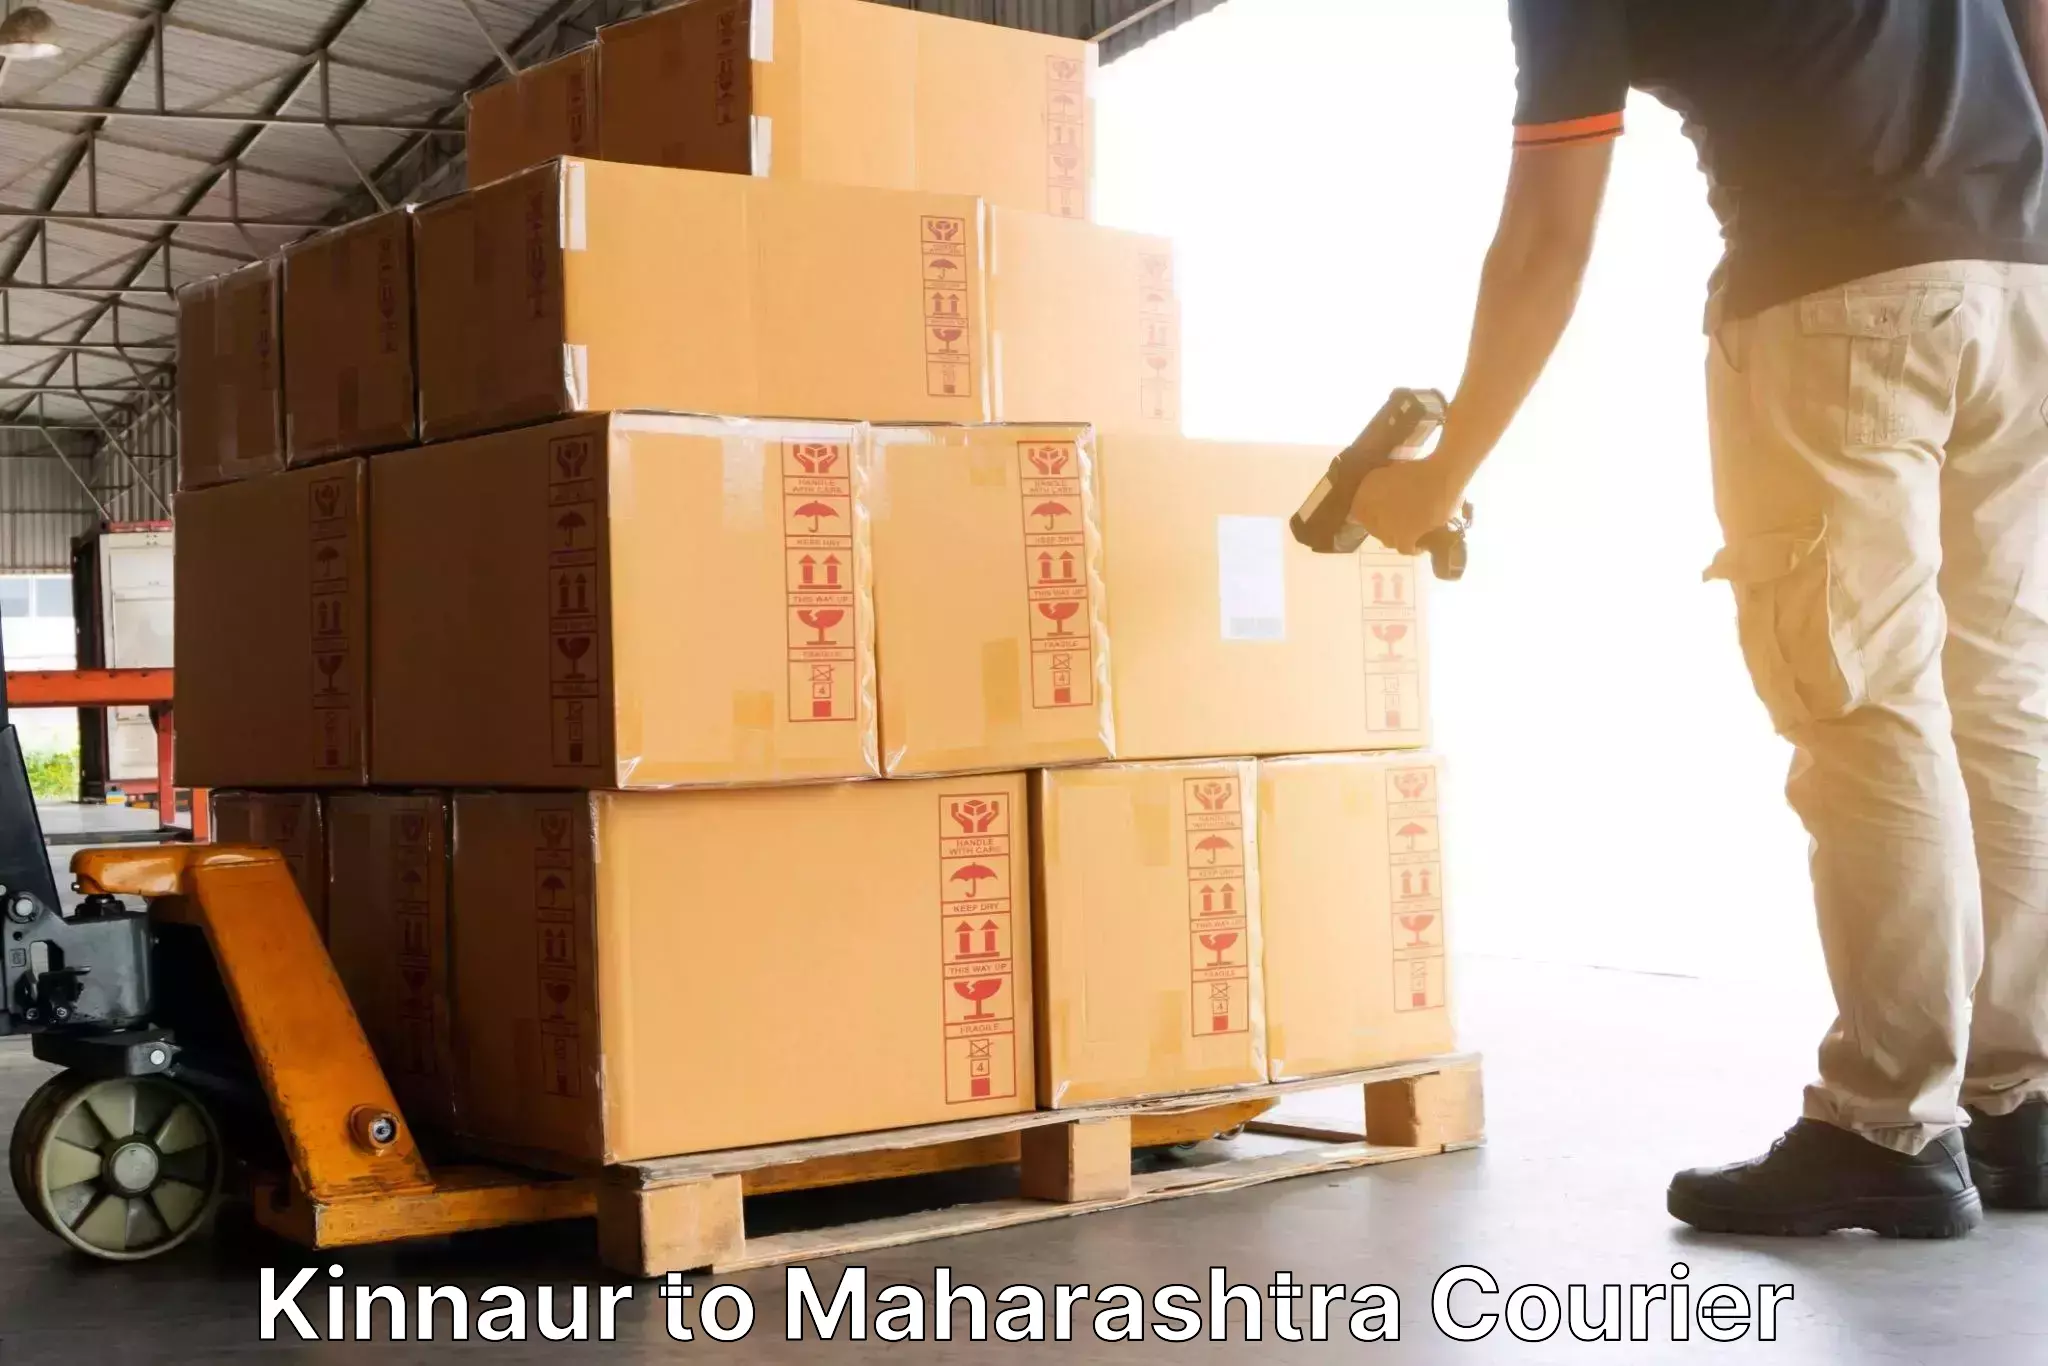 Courier service partnerships Kinnaur to Kannad